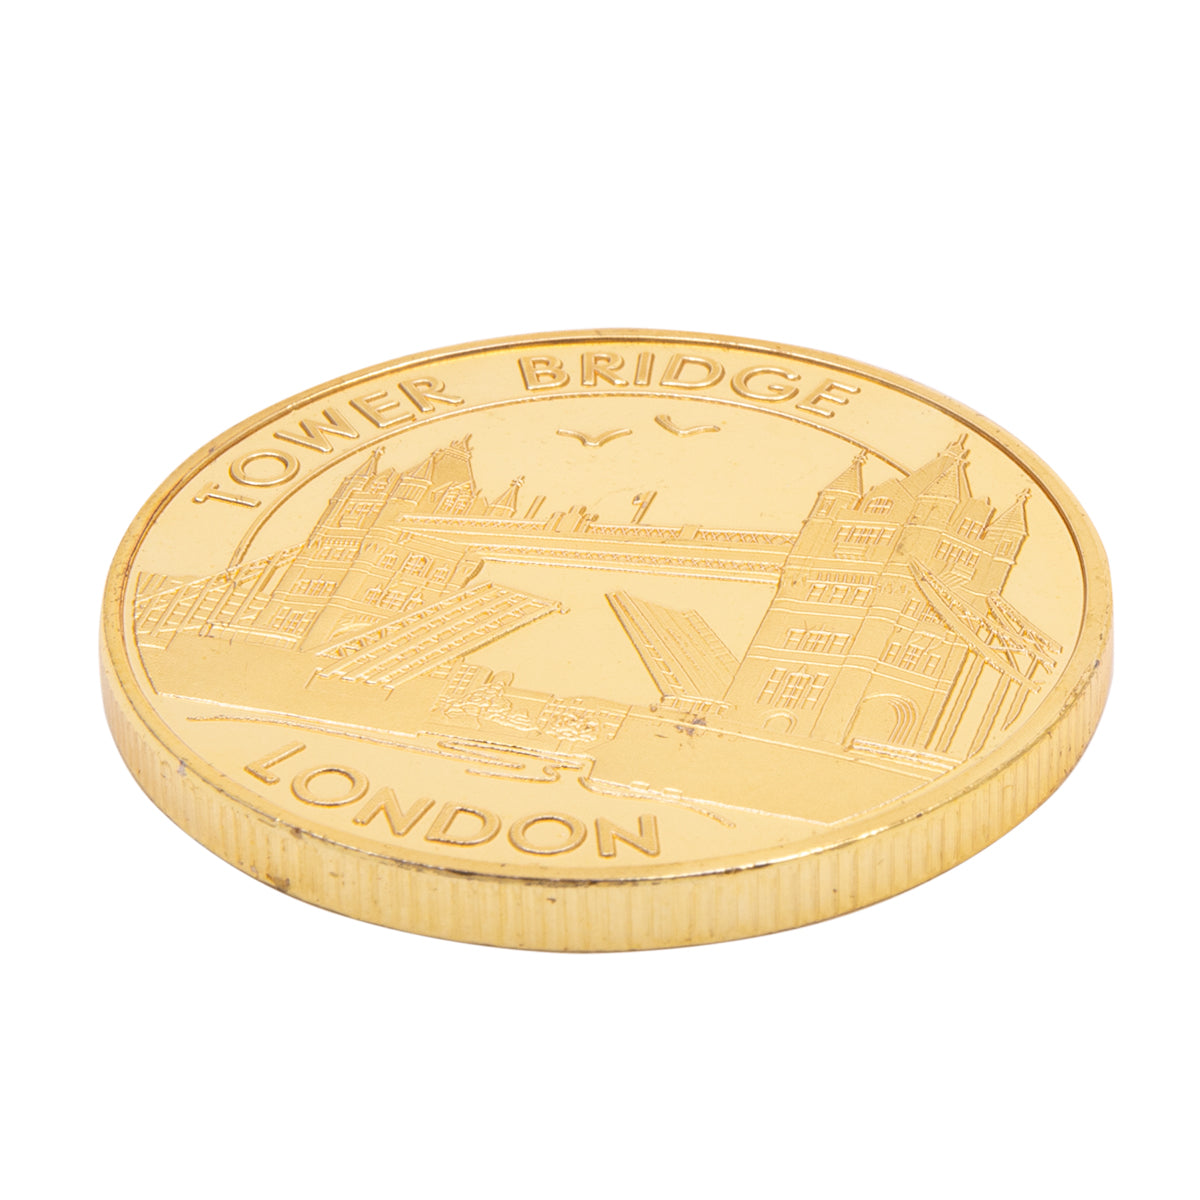 Tower Bridge Gold Medal Coin  3